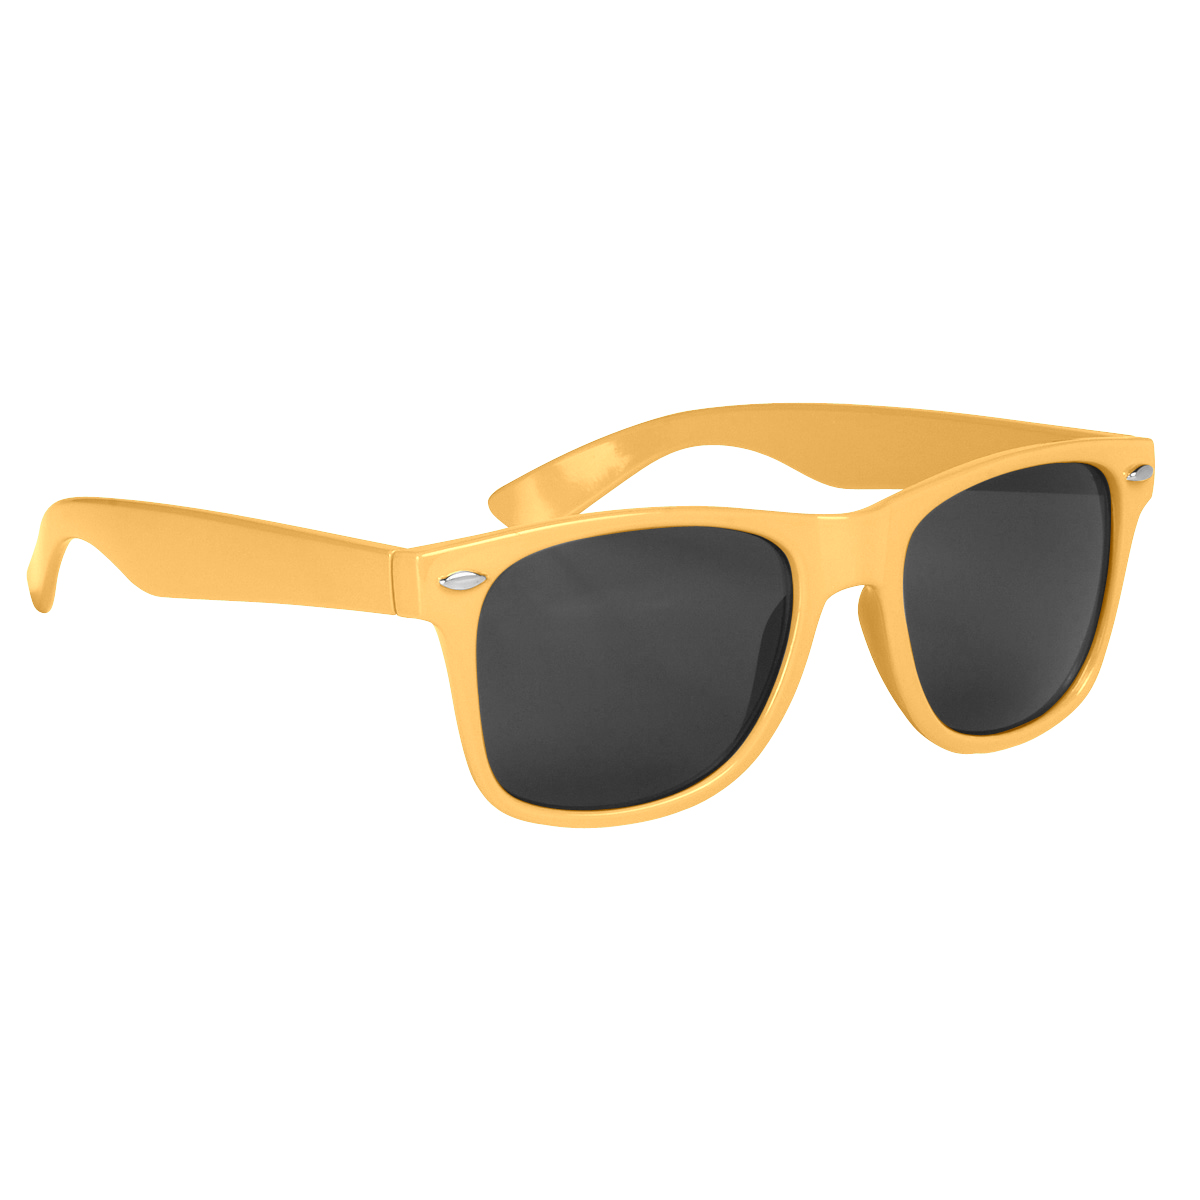 Athletic Gold Malibu Sunglasses - Colors